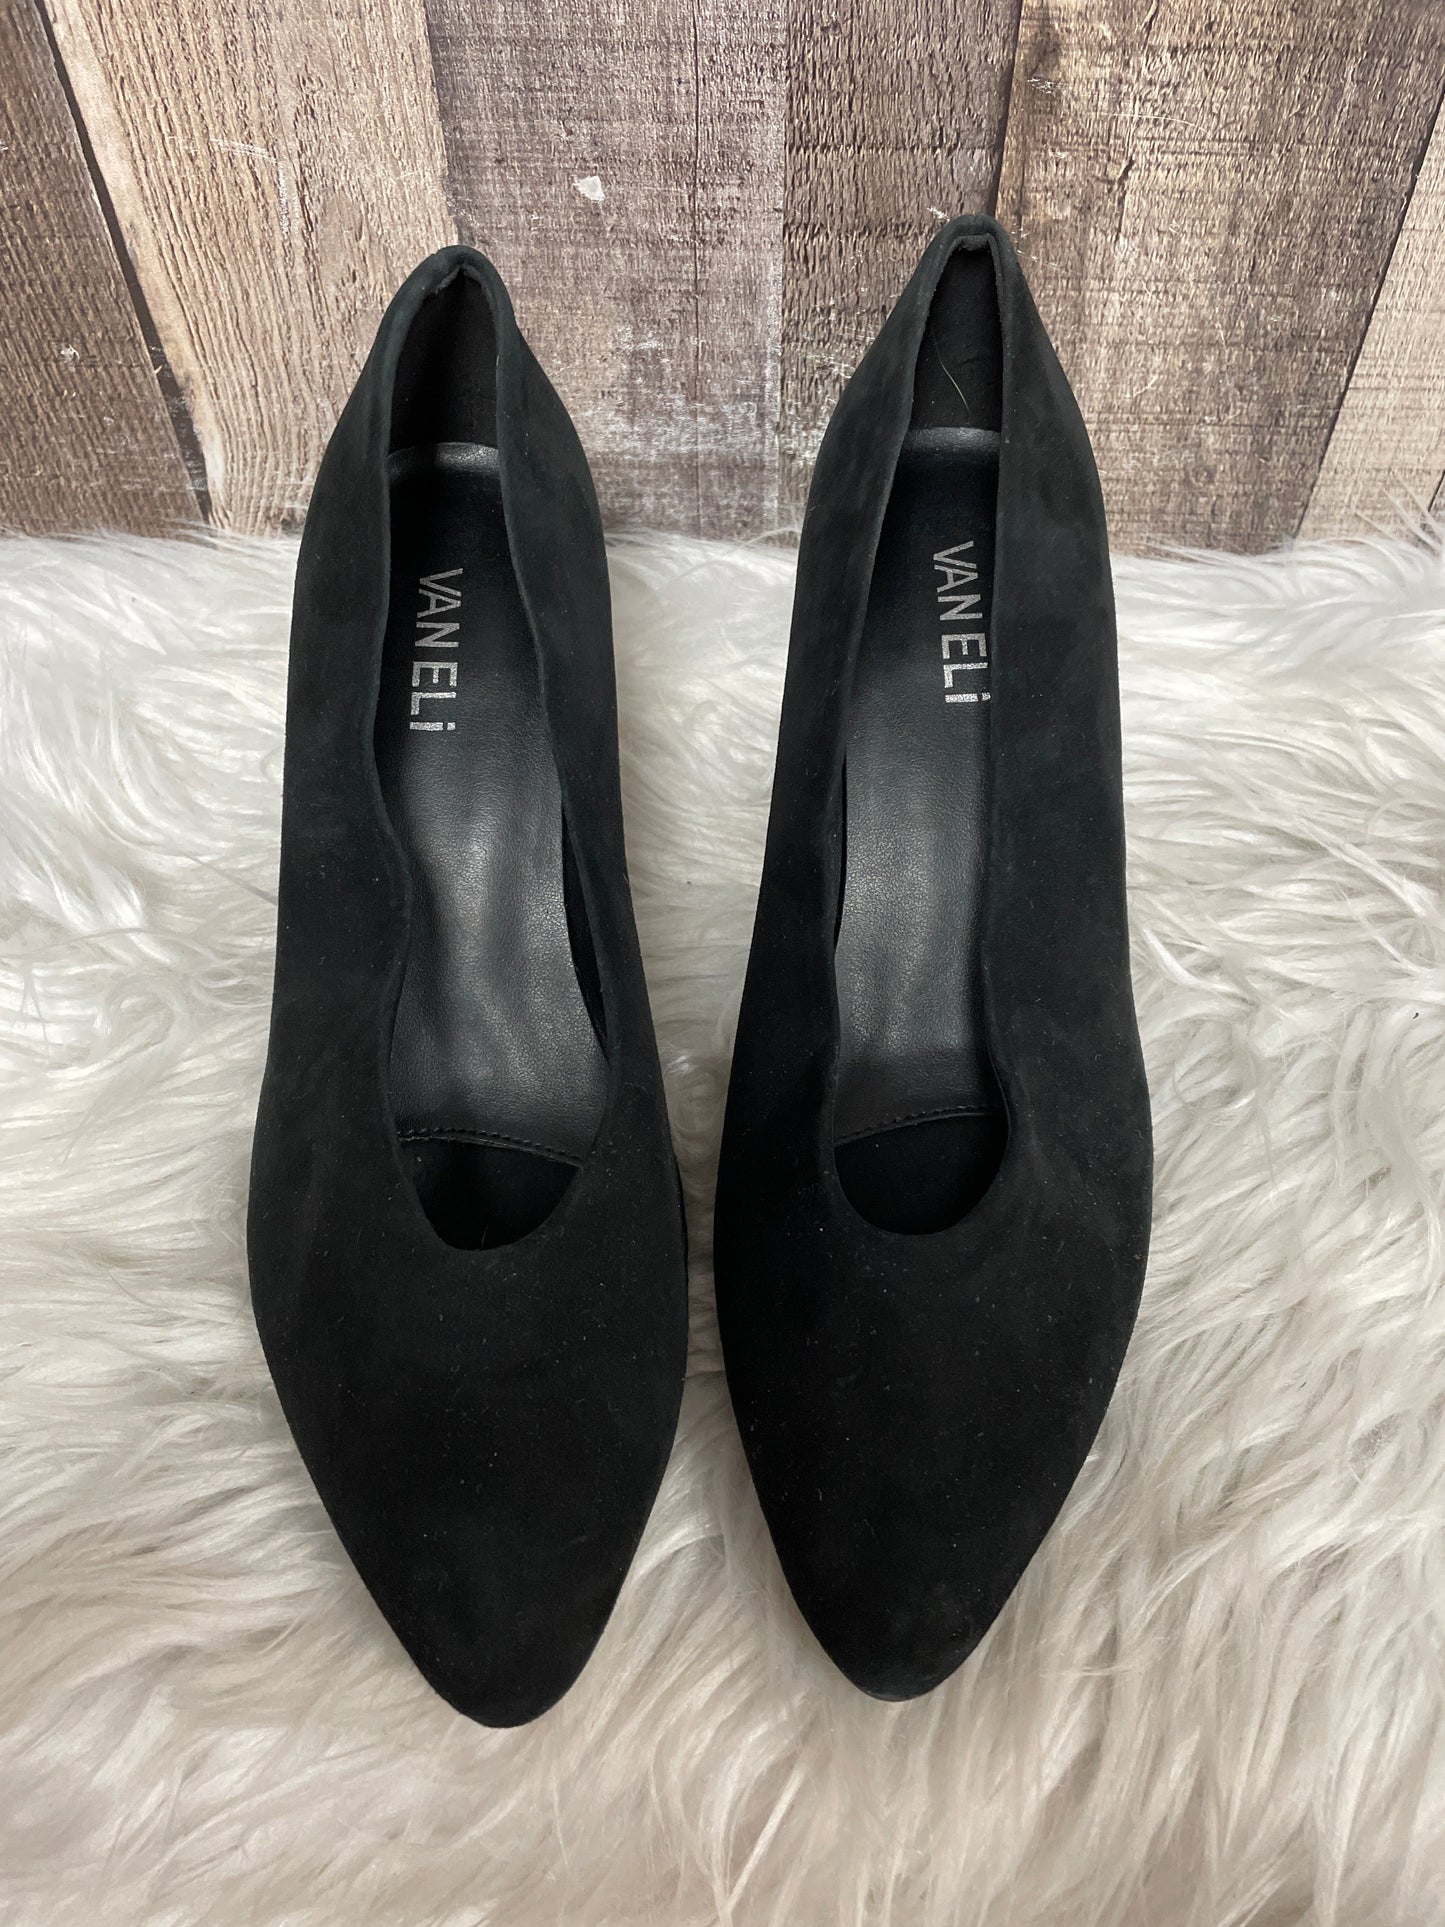 Shoes Heels Stiletto By Vaneli  Size: 7.5